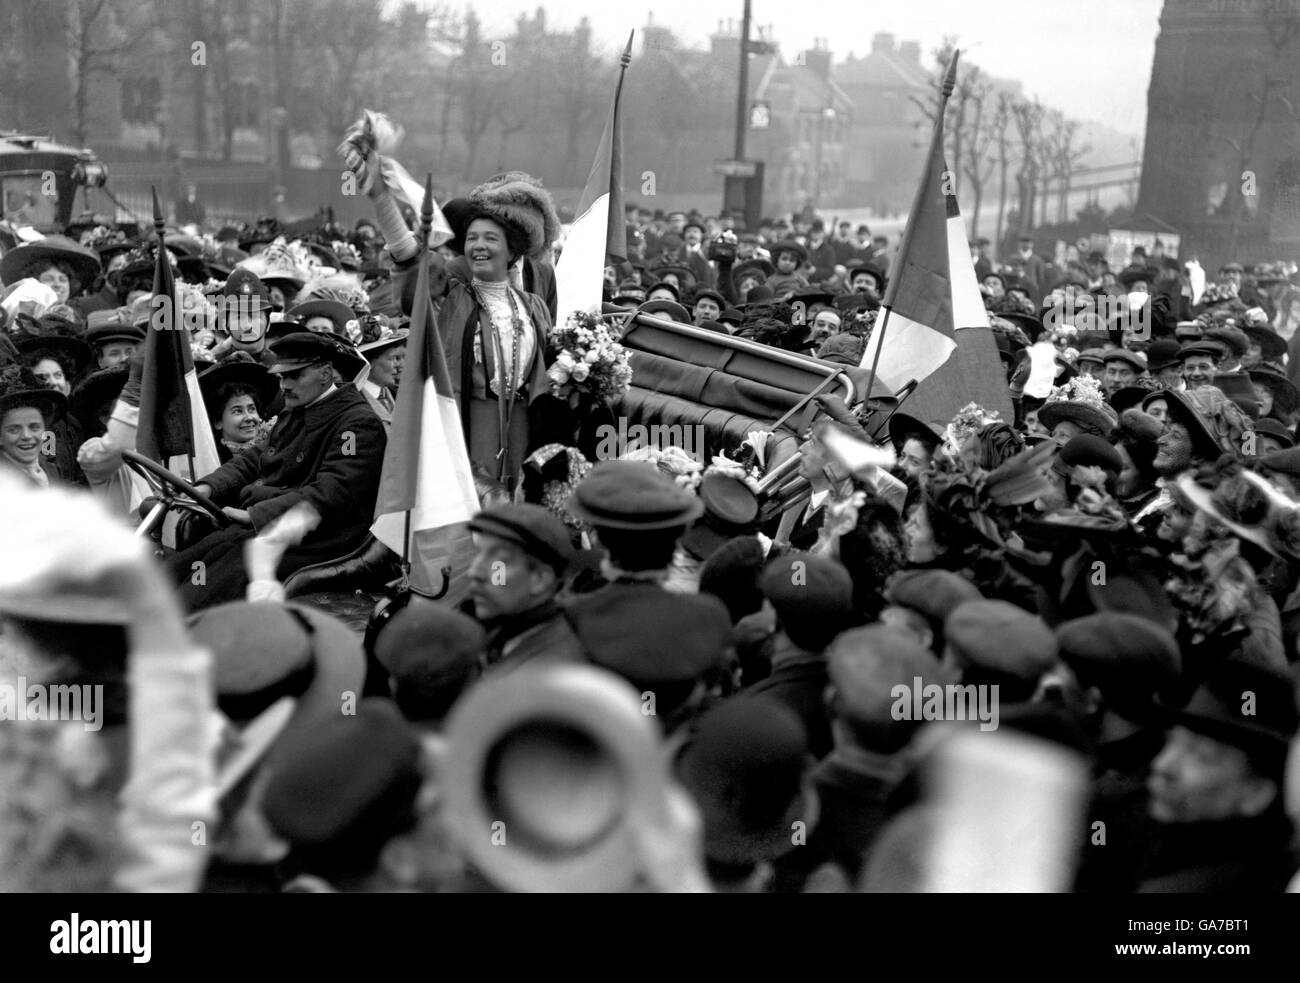 British Politics - The Suffragettes - London - 1909 Stock Photo